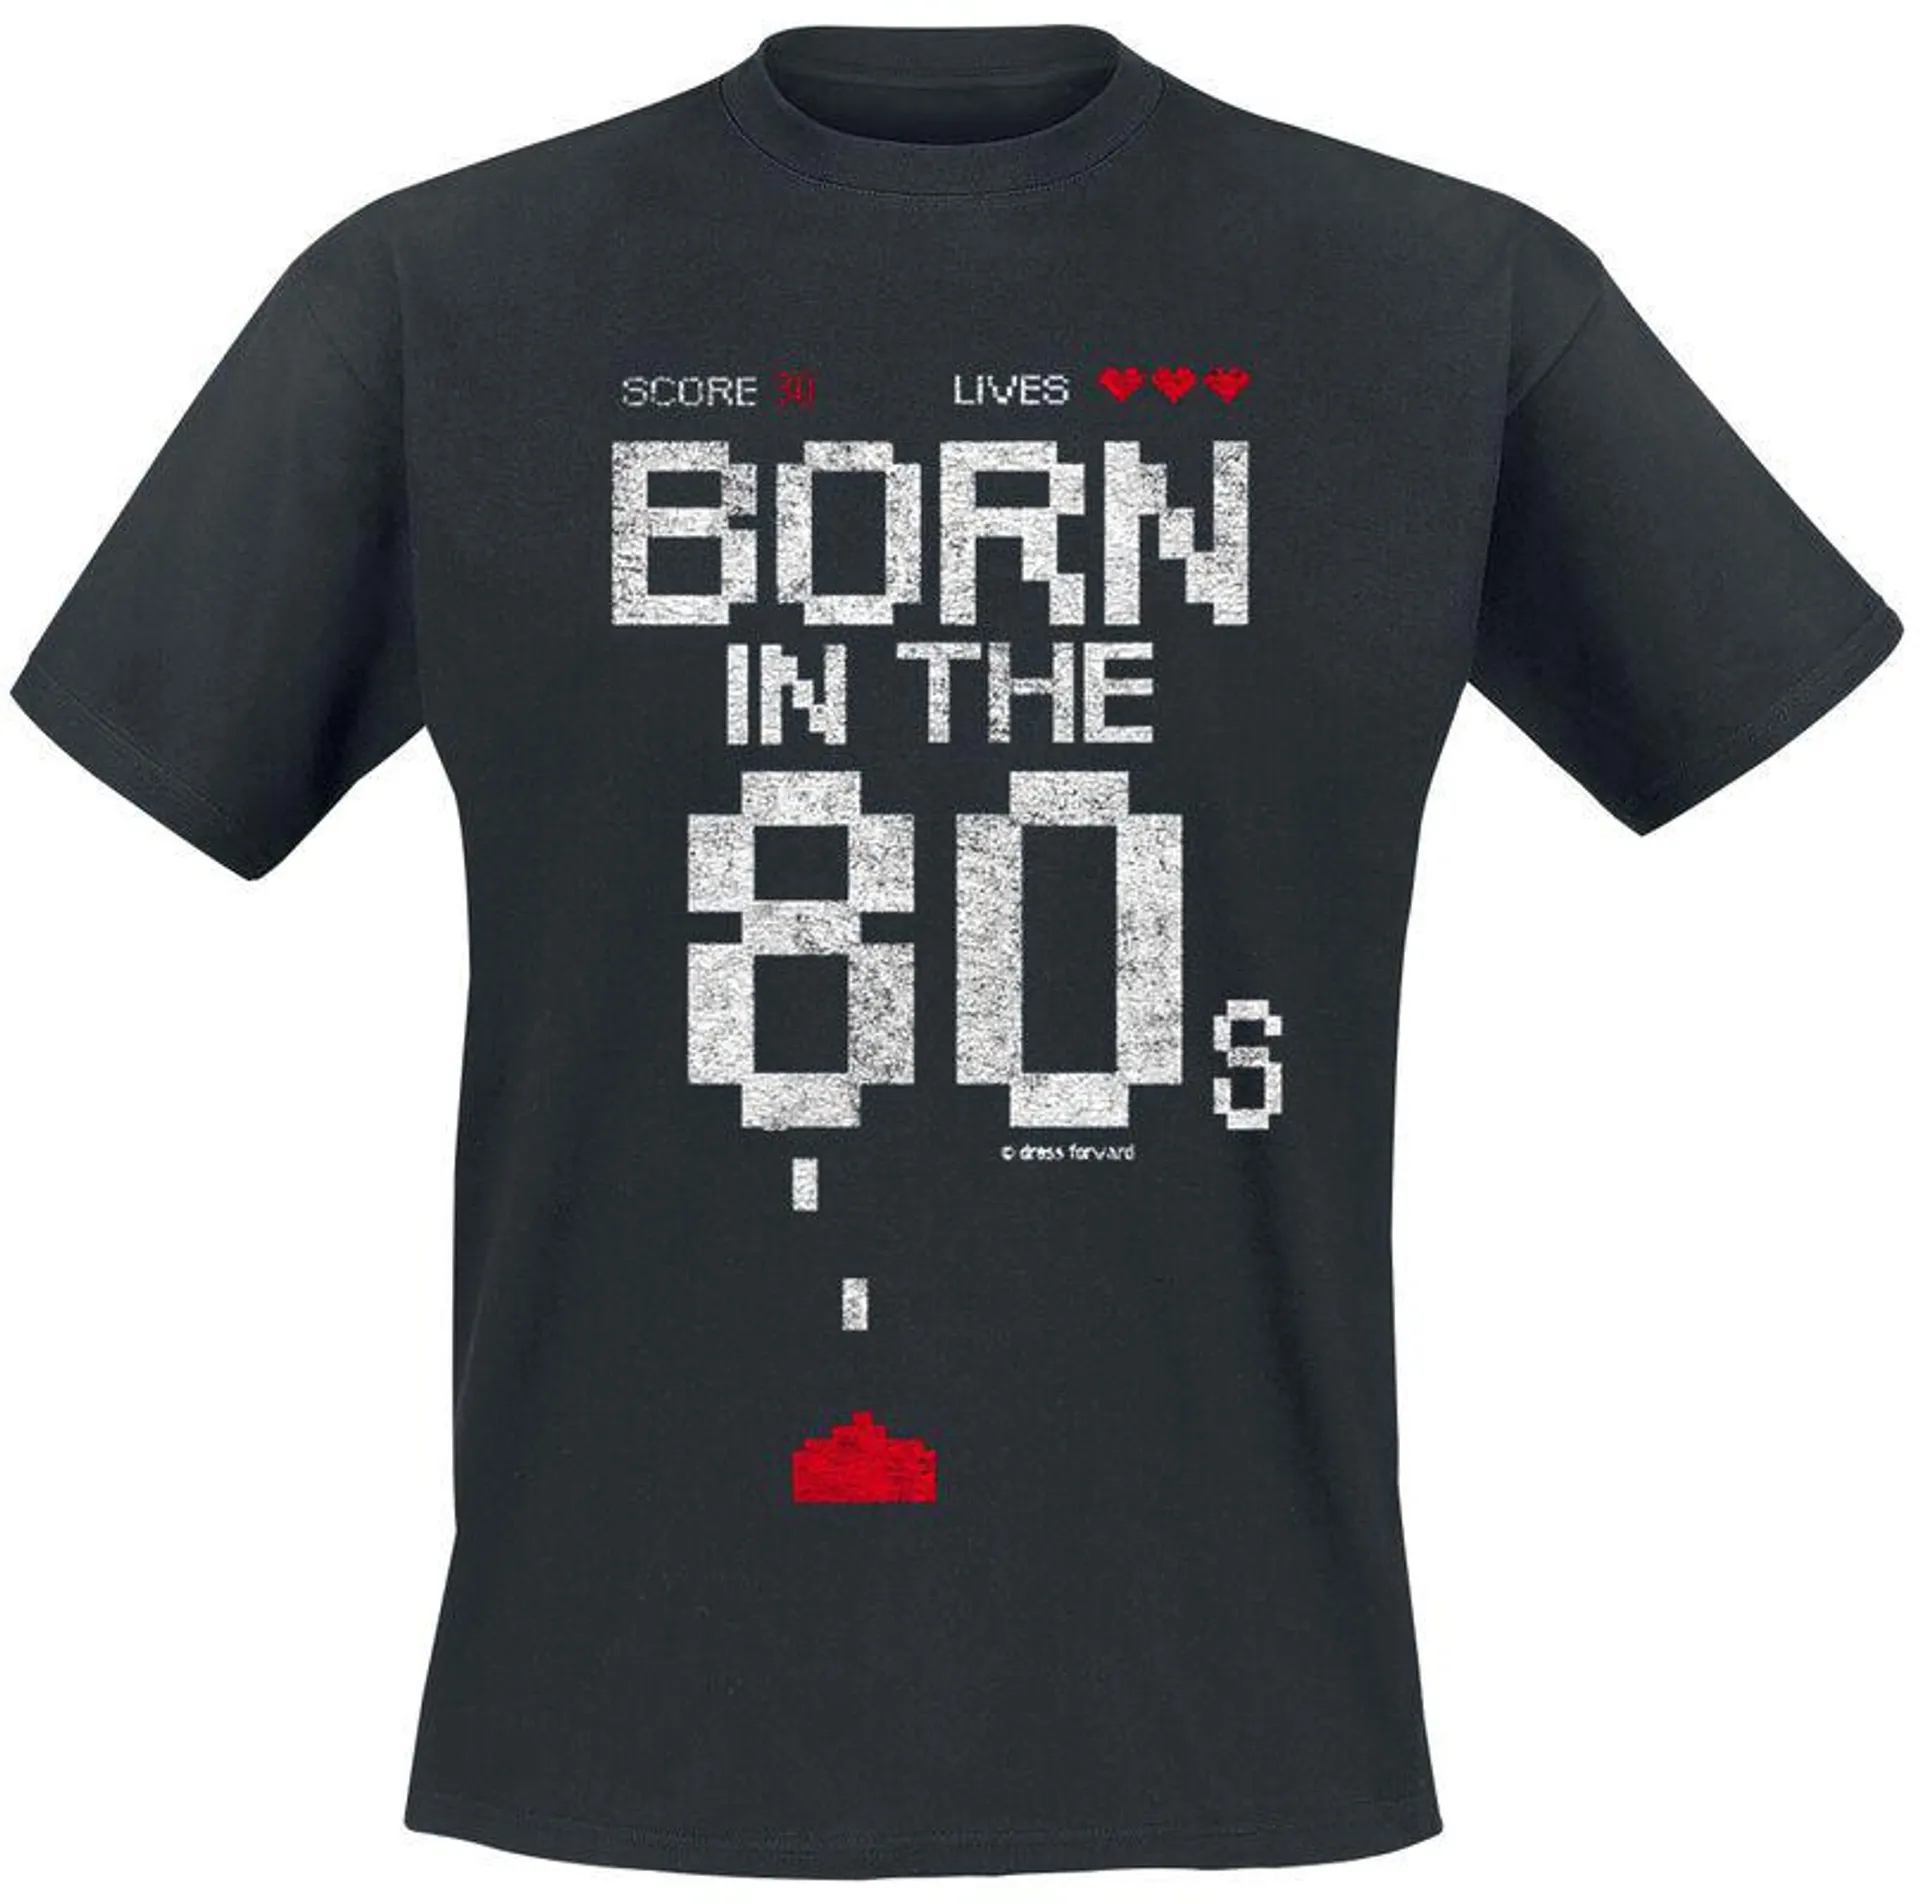 "Born In The 80s Born in the 80s" Camiseta Negro